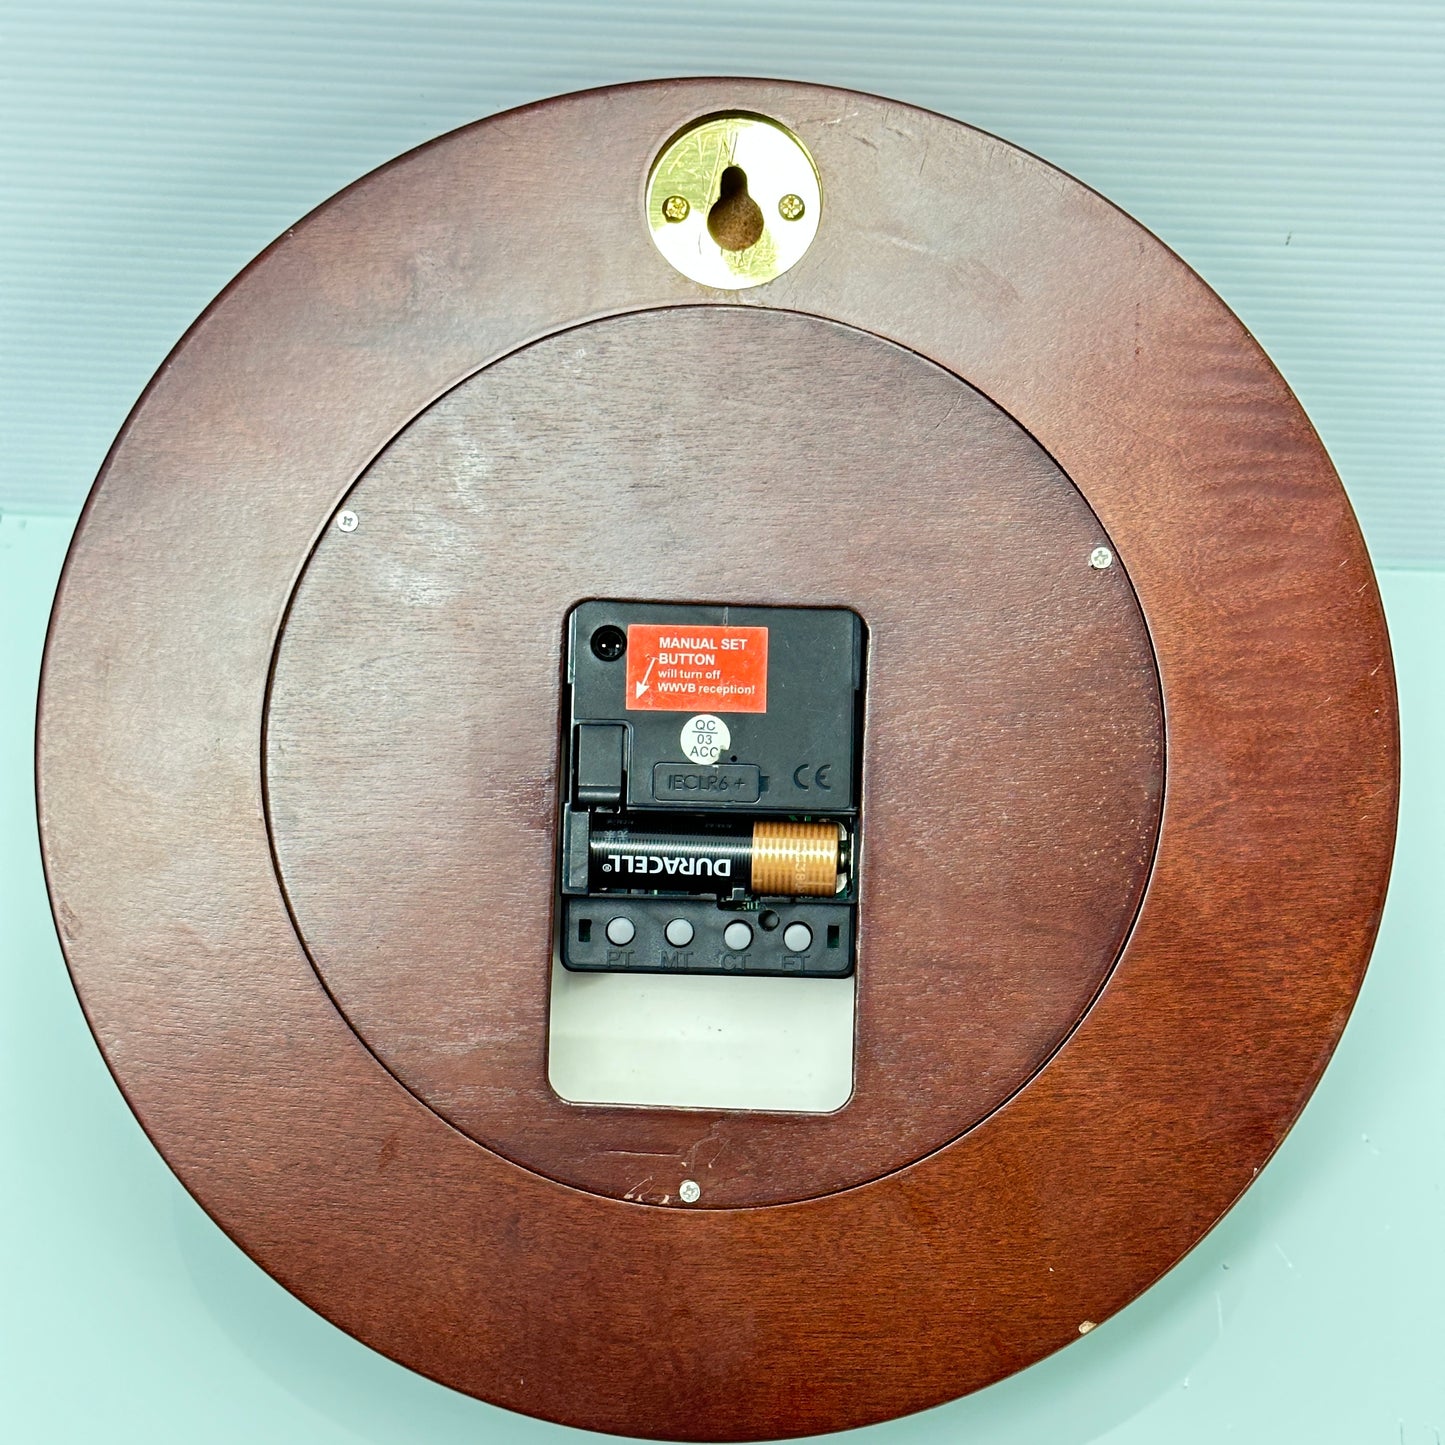 Radio Control Porthole Clock by Weems and Plath